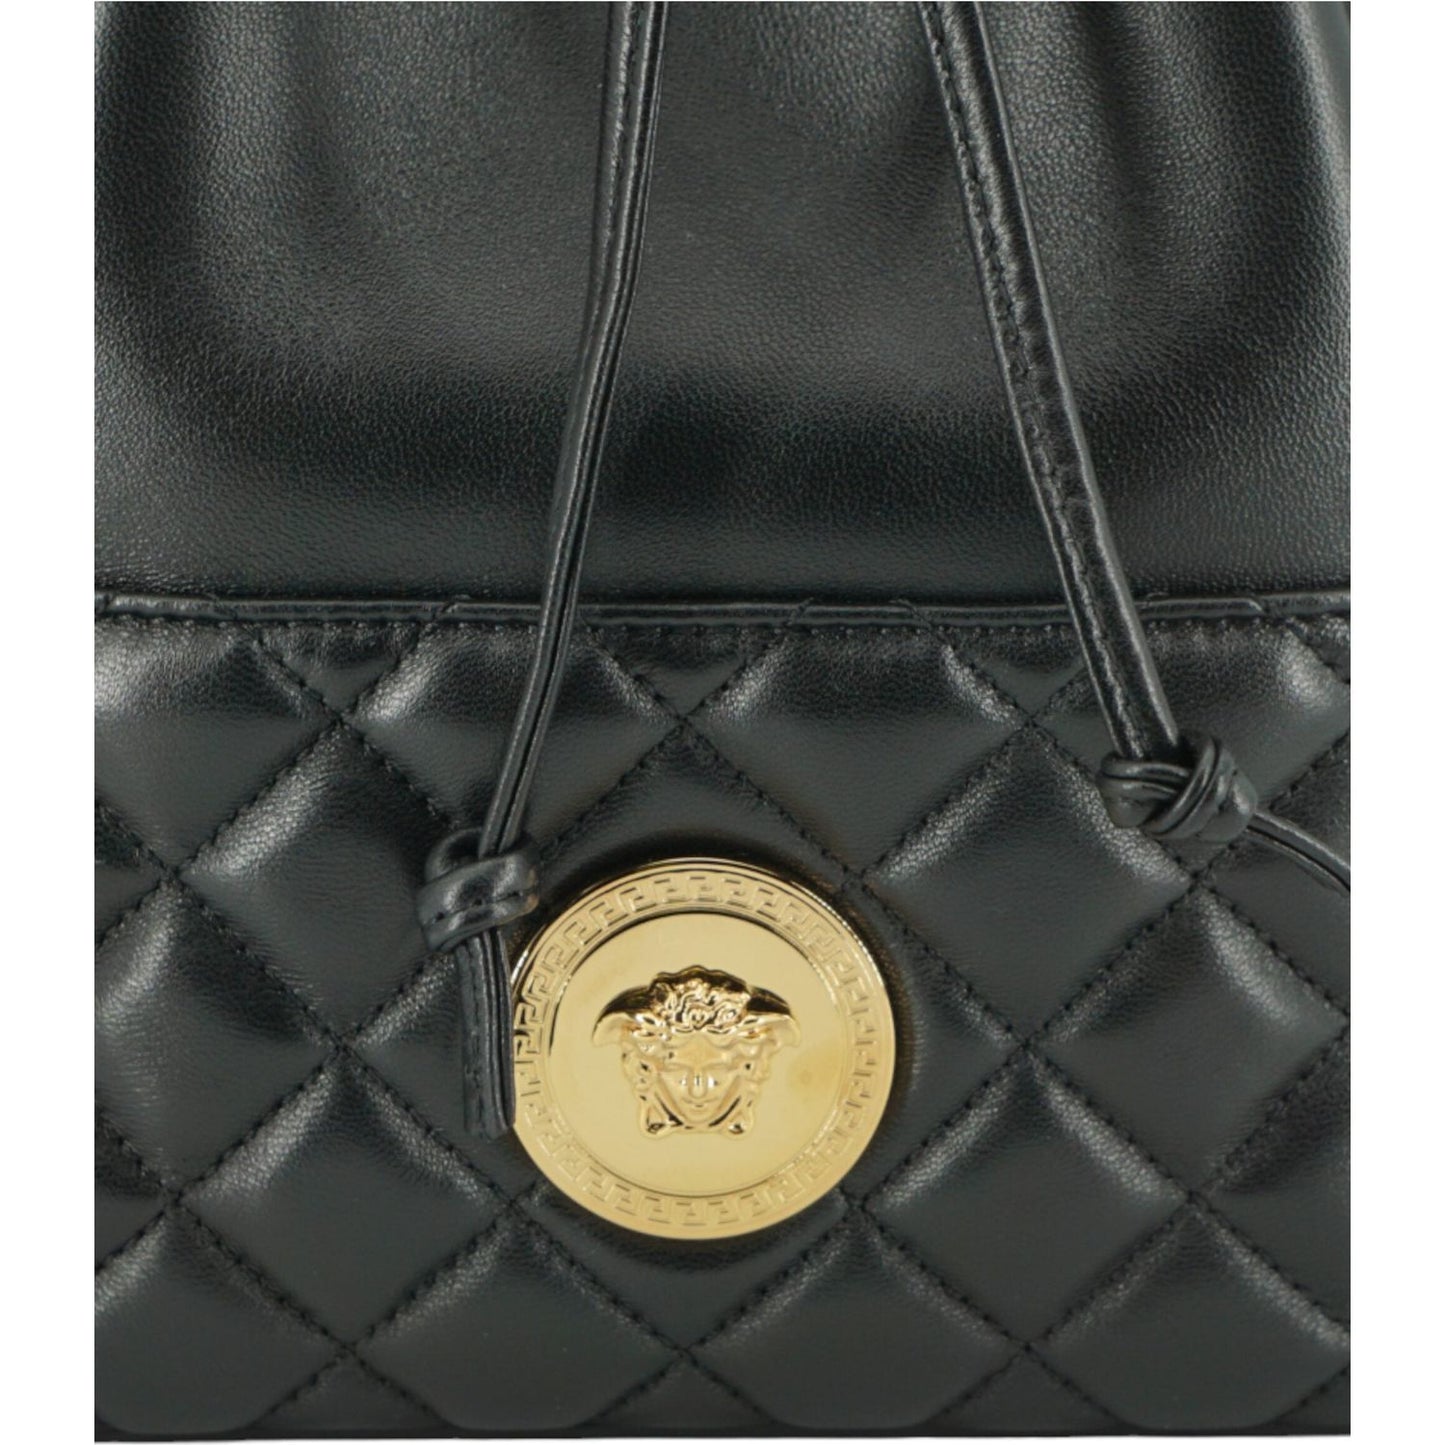 Versace Black Lamb Leather Bucket Shoulder Bag black-lamb-leather-bucket-shoulder-bag DSC01124-scaled-c487e018-be6.jpg